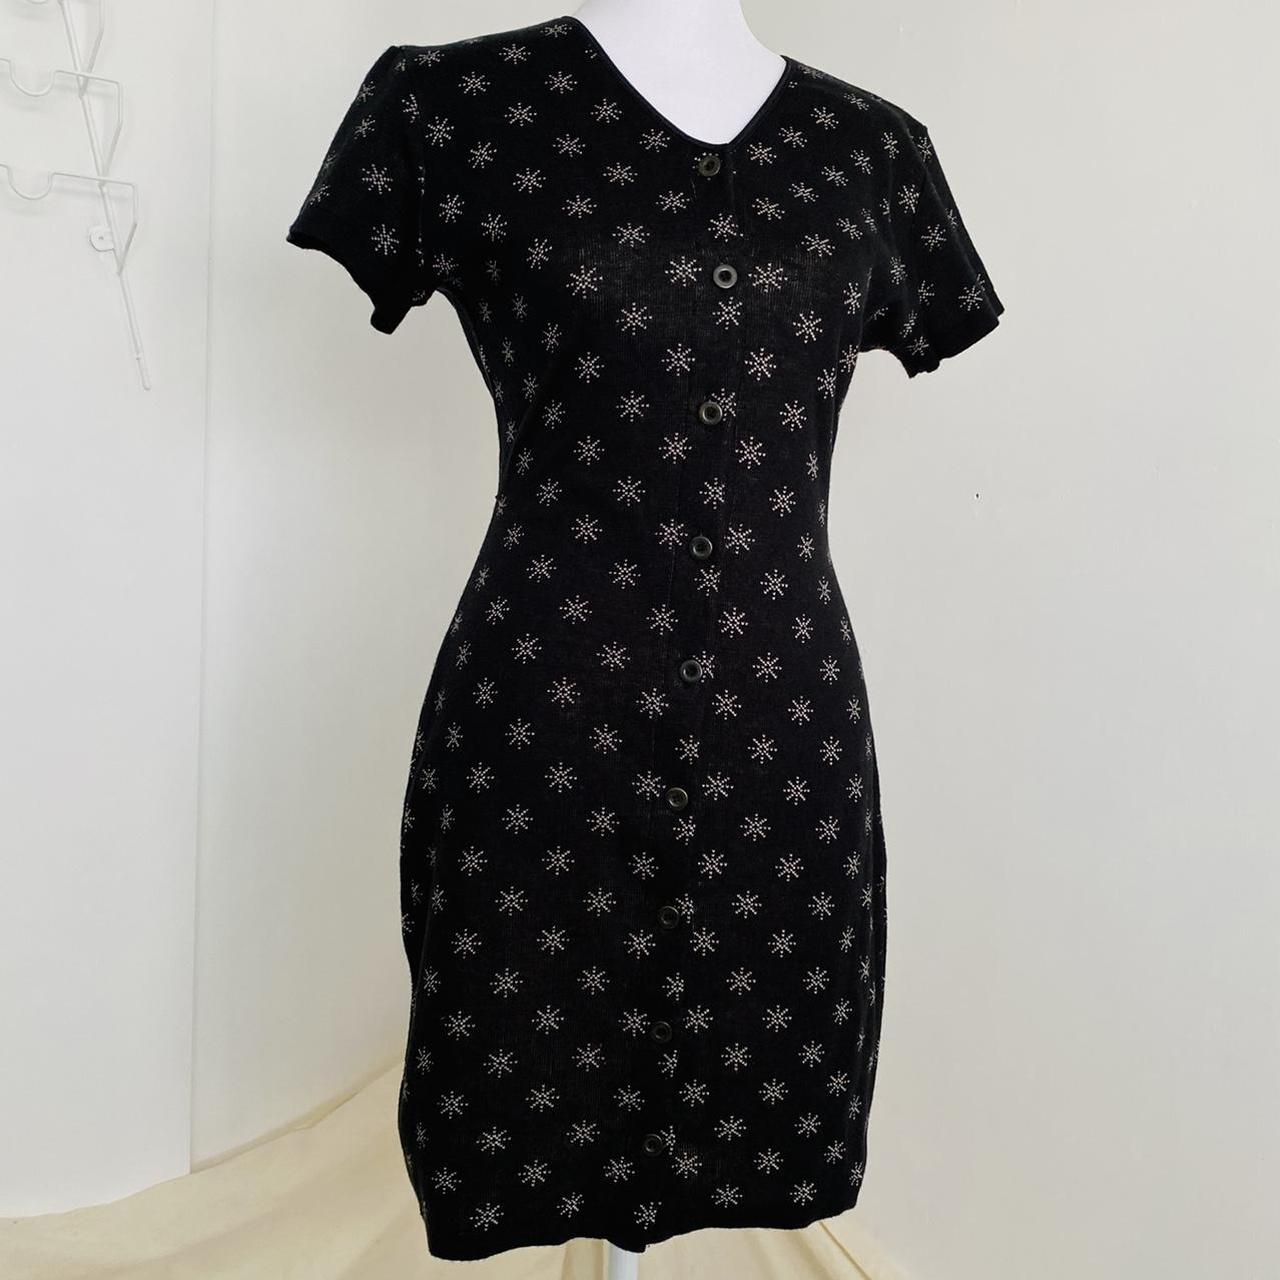 KOOKAÏ Women's Cream and Black Dress